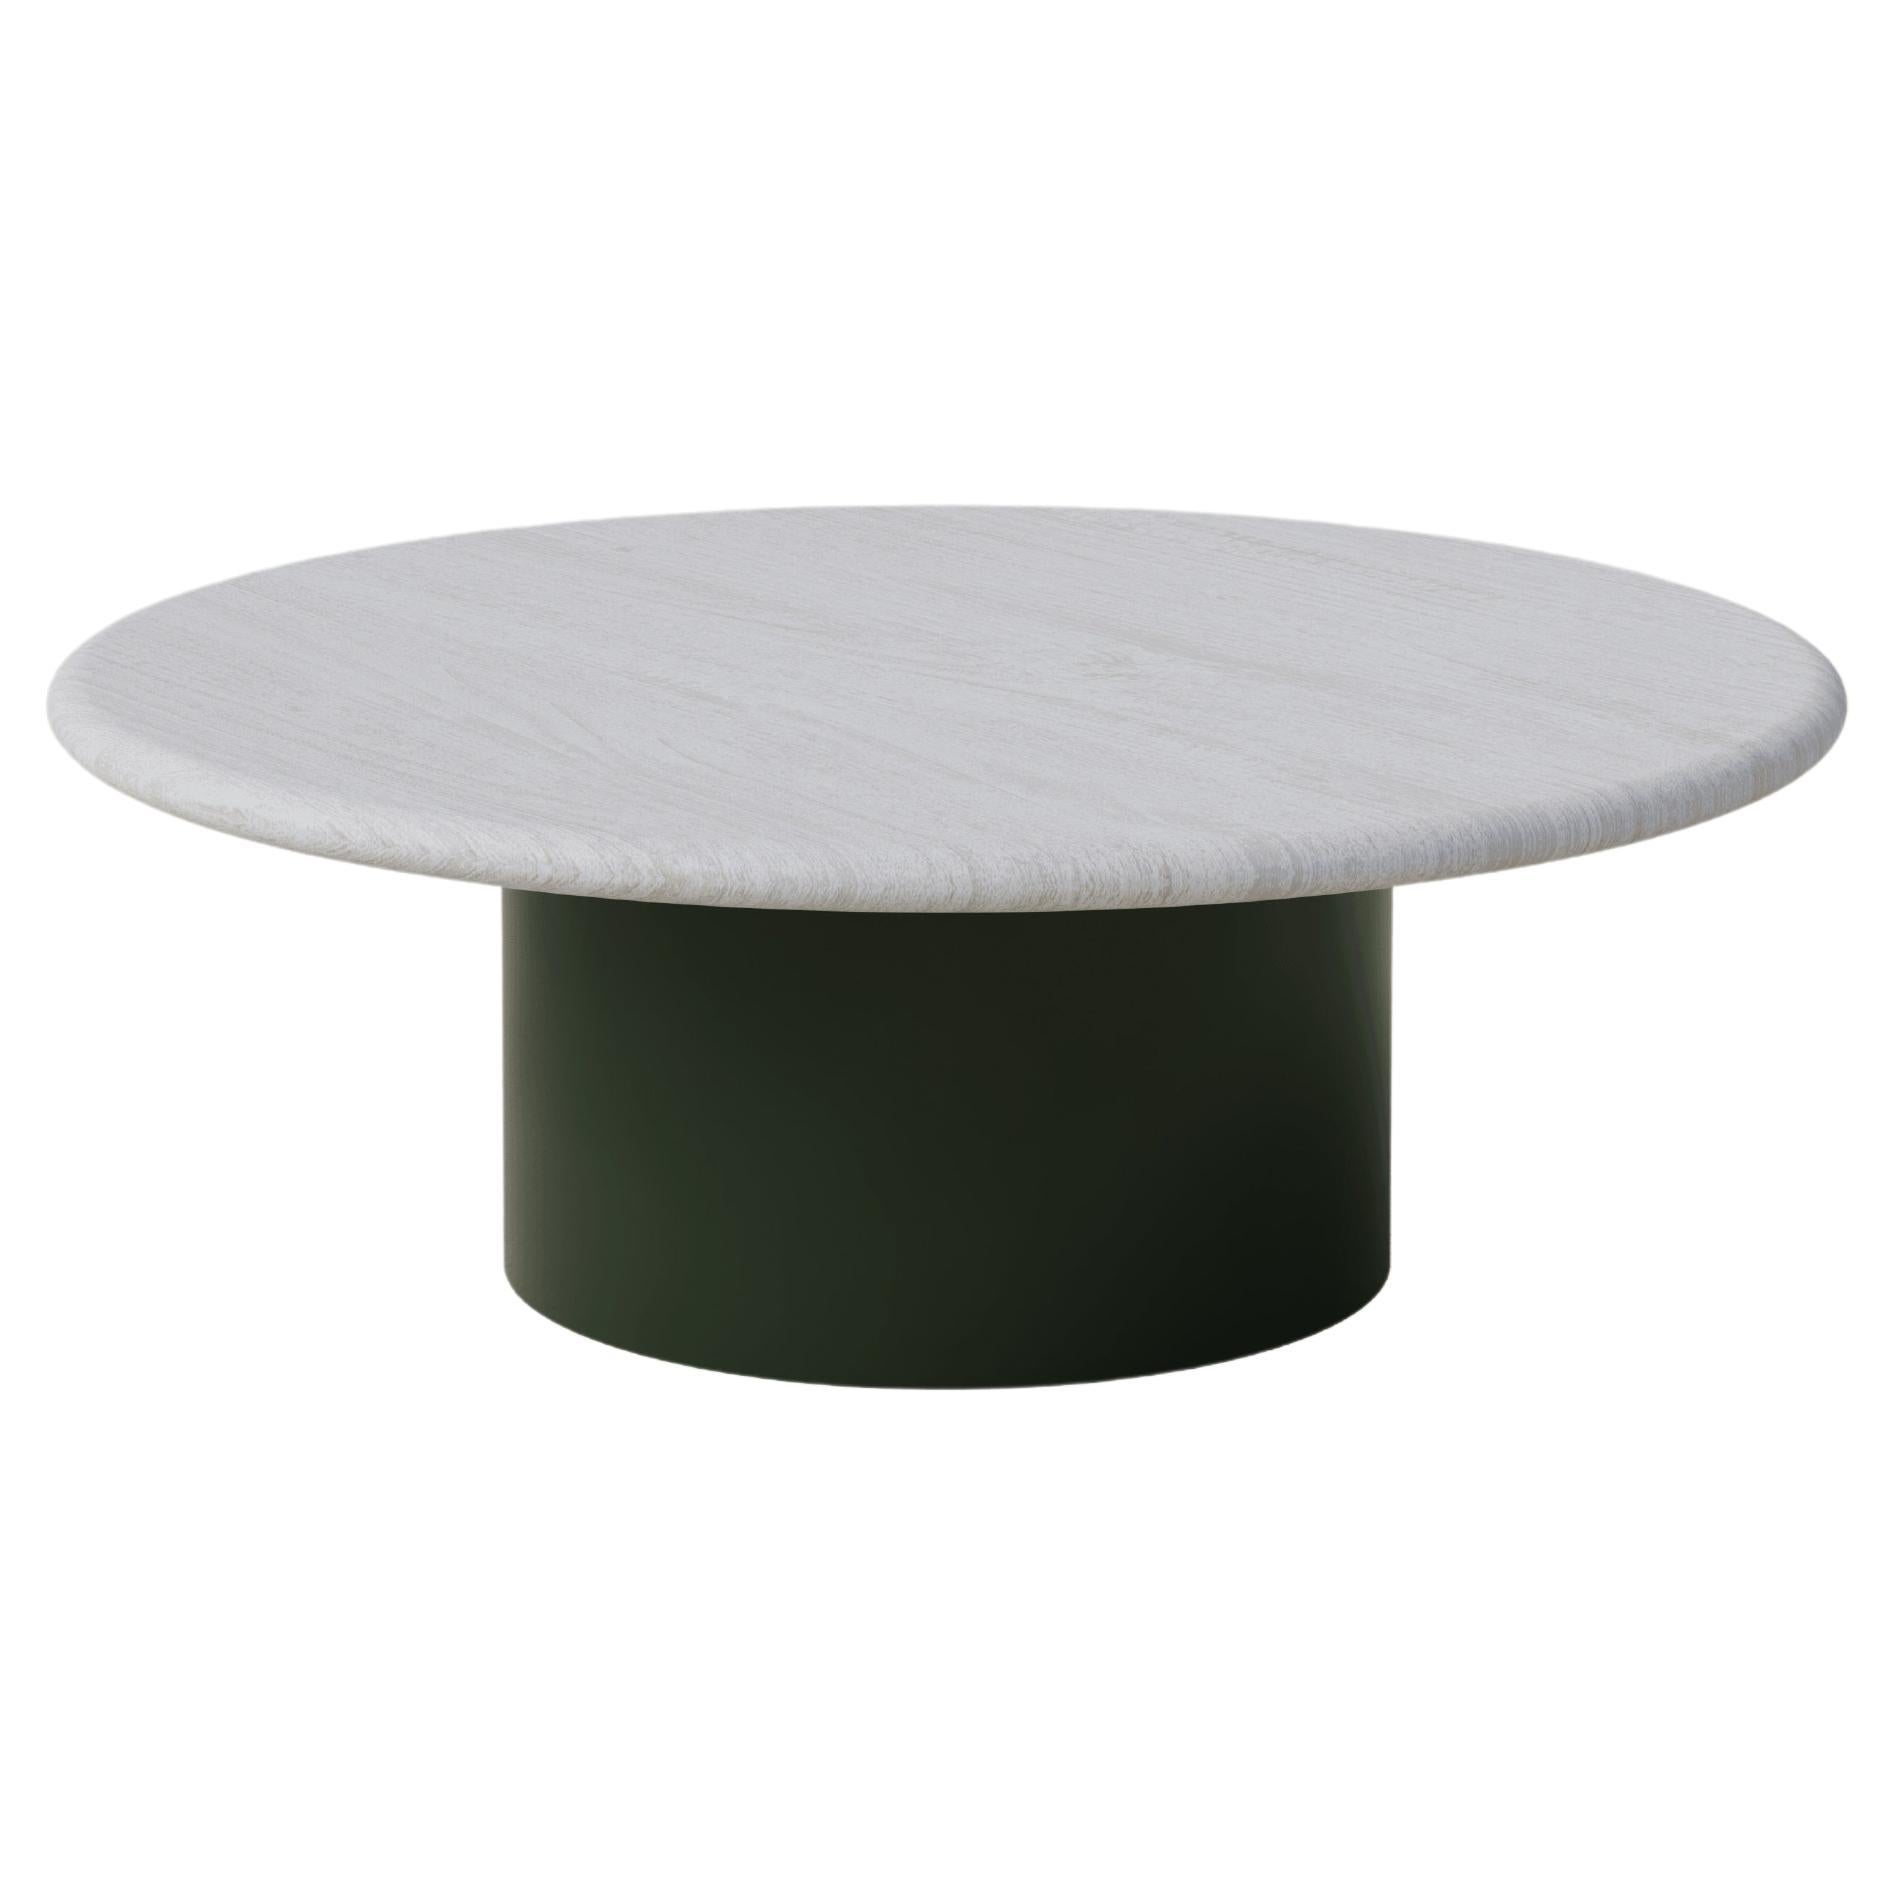 Raindrop Coffee Table, 800, White Oak / Moss Green